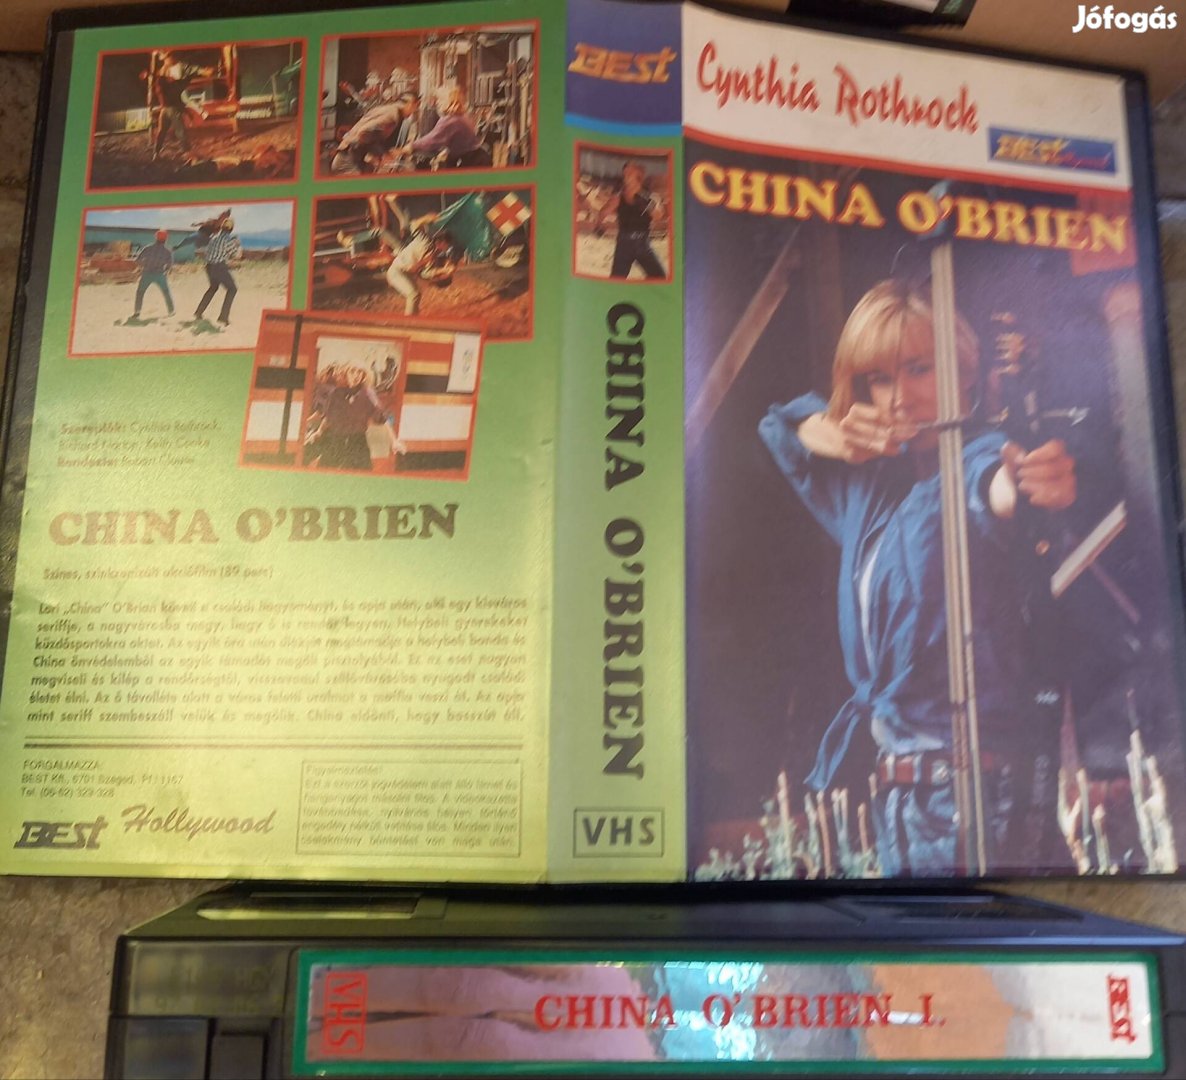 China 'O Brien - akció vhs - Cynthia Rothrock